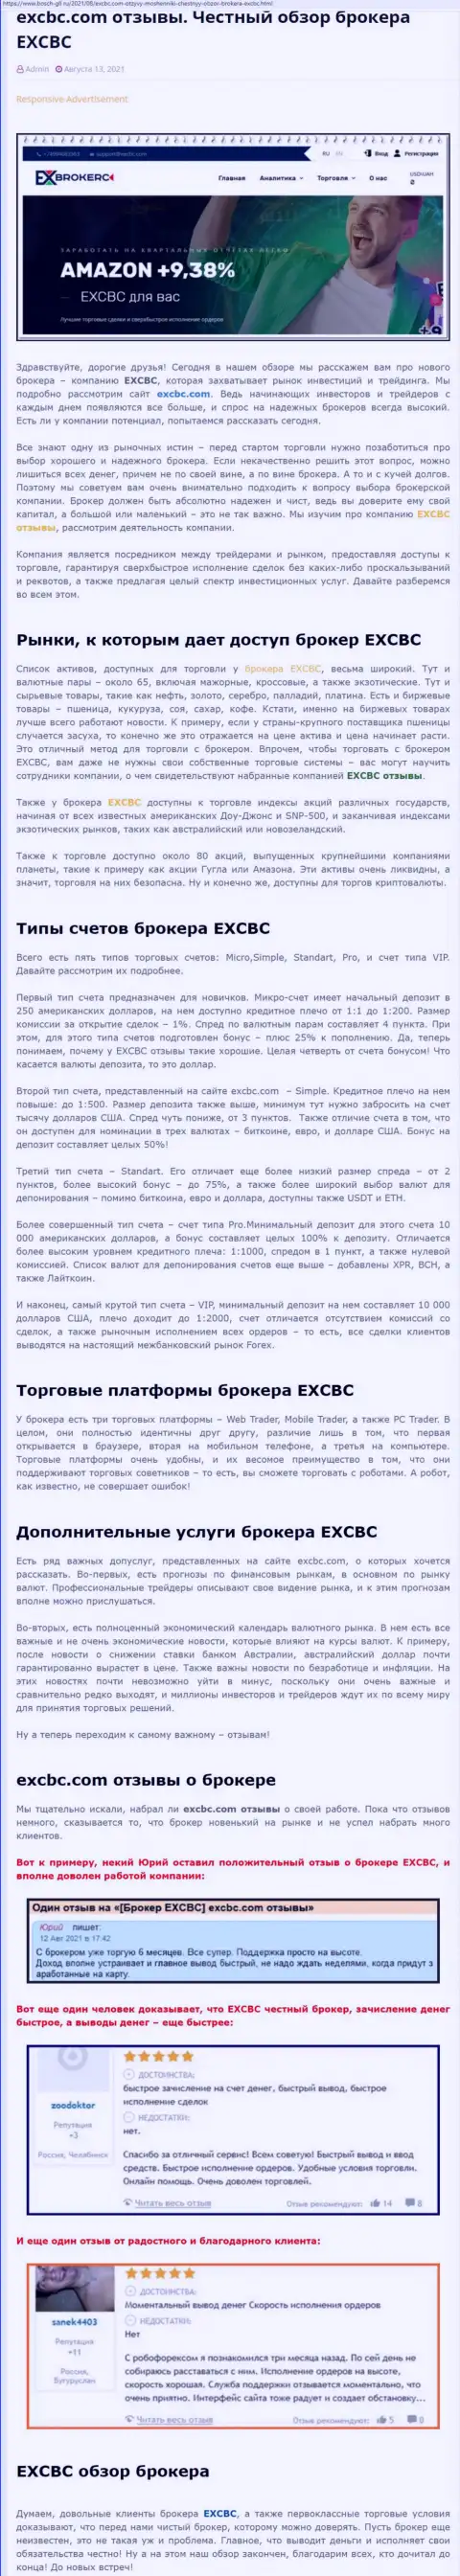 Информация о Форекс-дилере EXCBC на сайте bosch gll ru